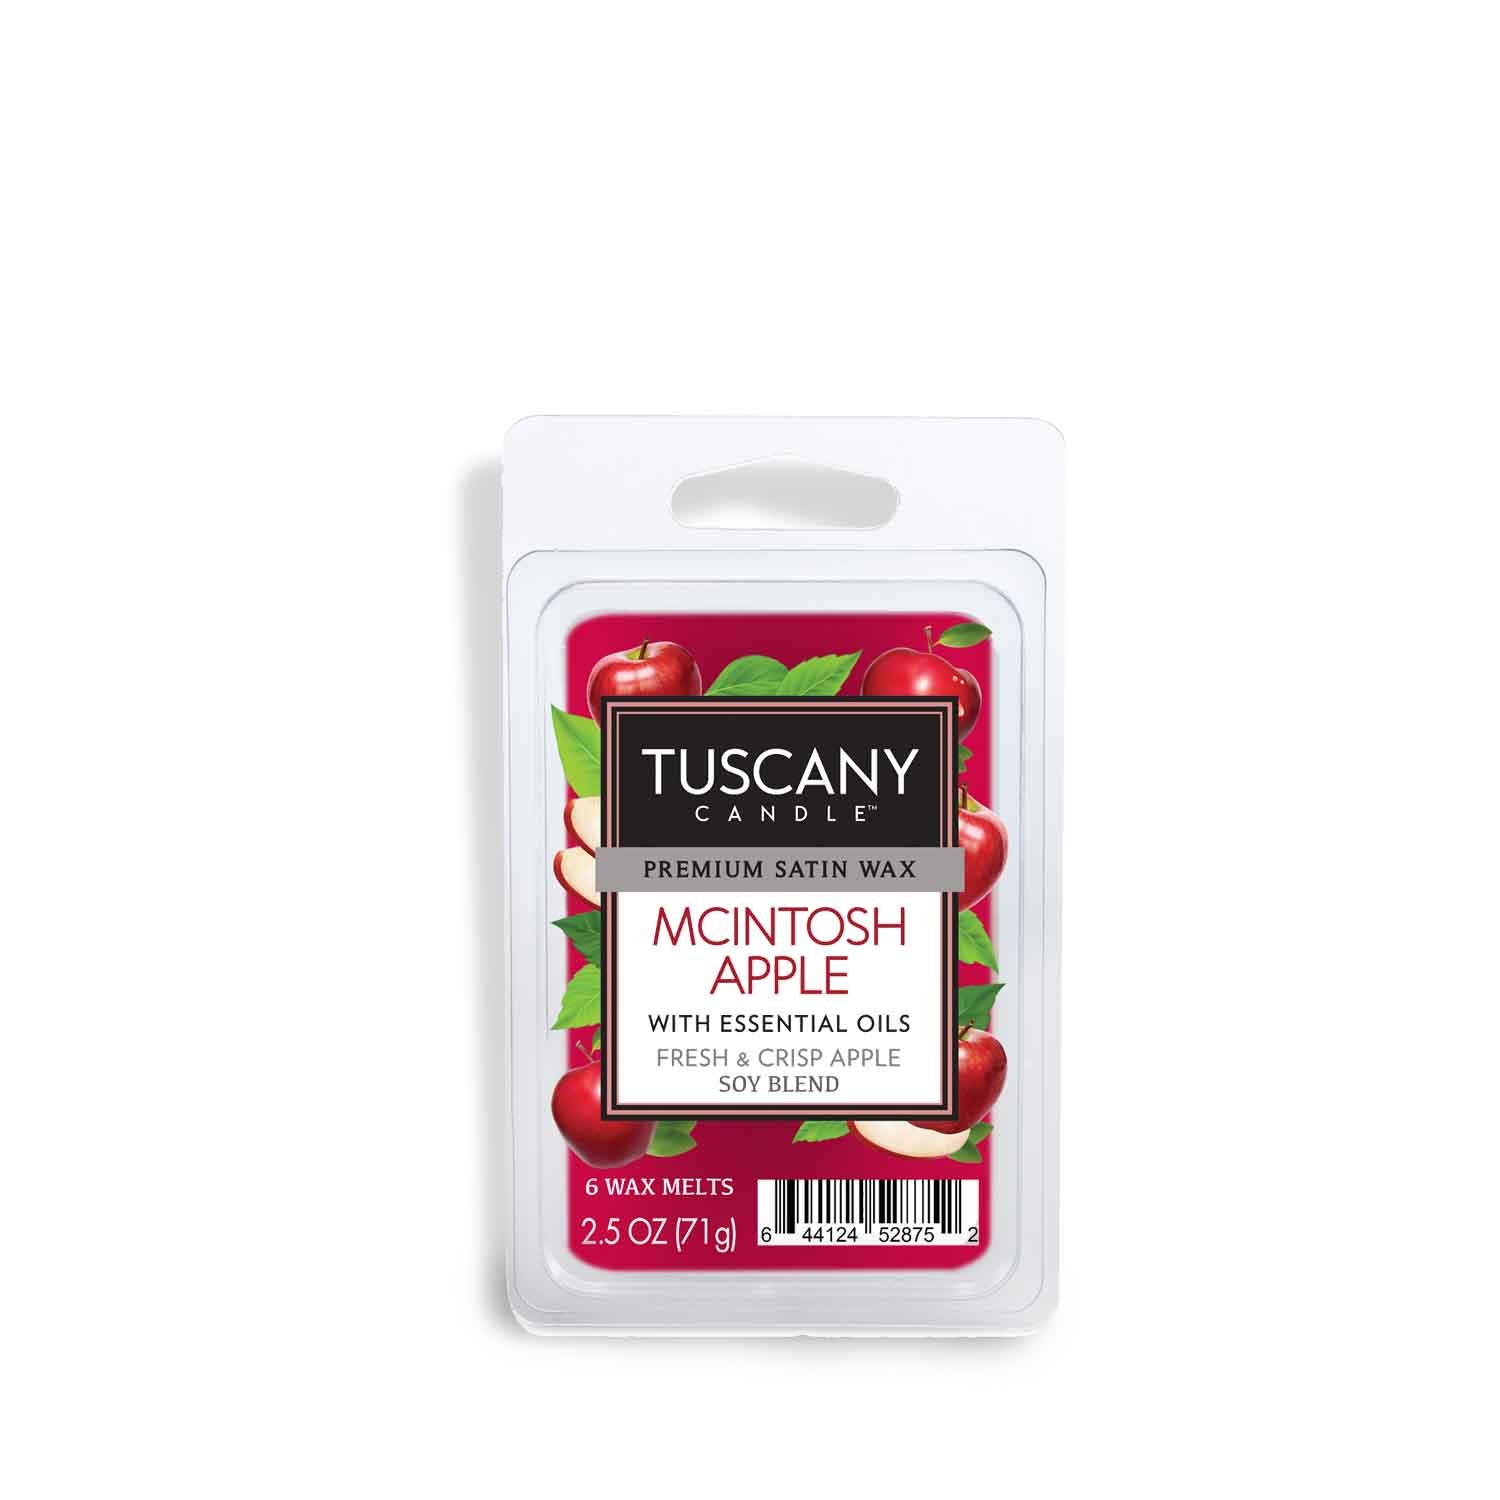 McIntosh Apple scented wax melt (2.5 oz) - Tuscany Candle fragranced tart bars.